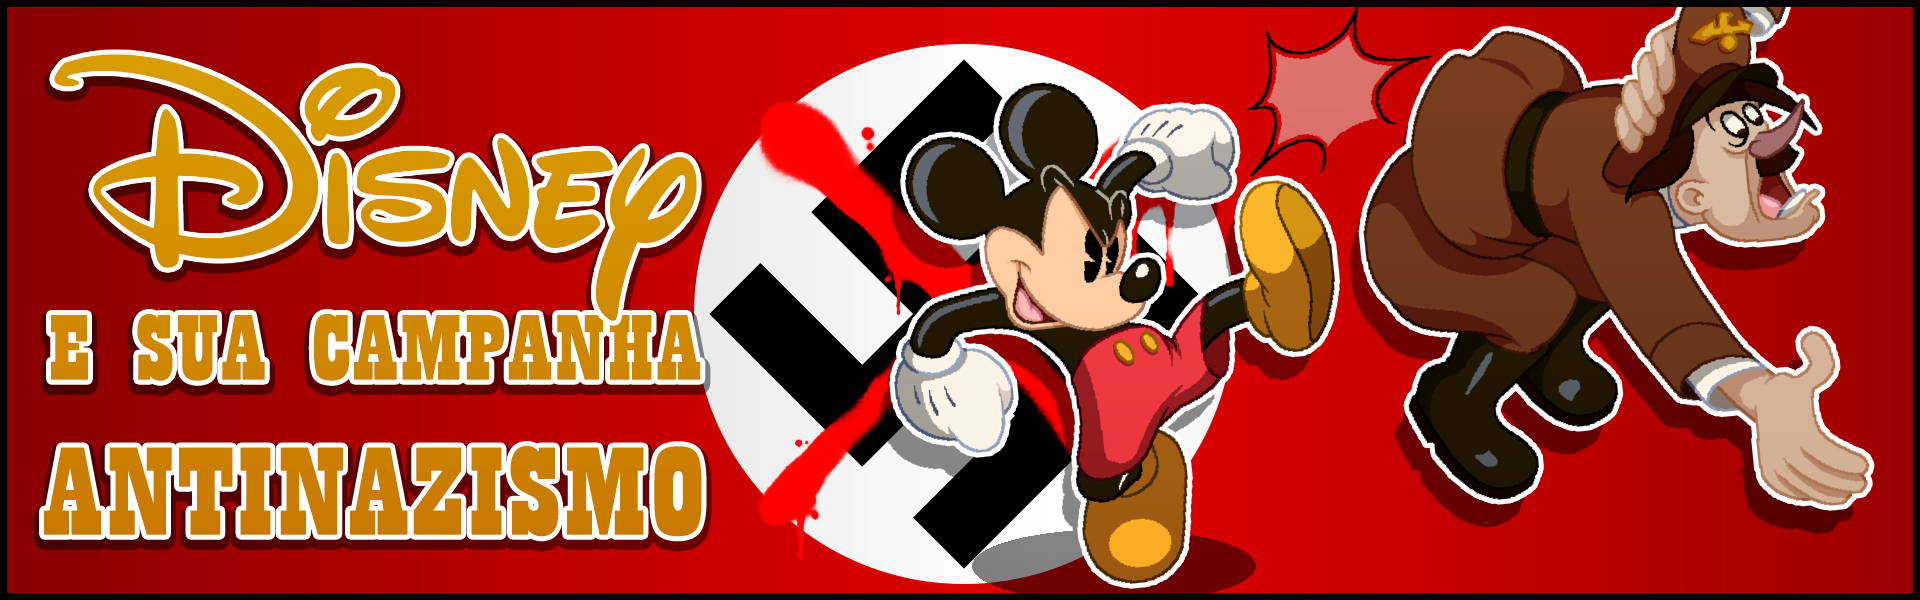 Disney e o Antinazismo